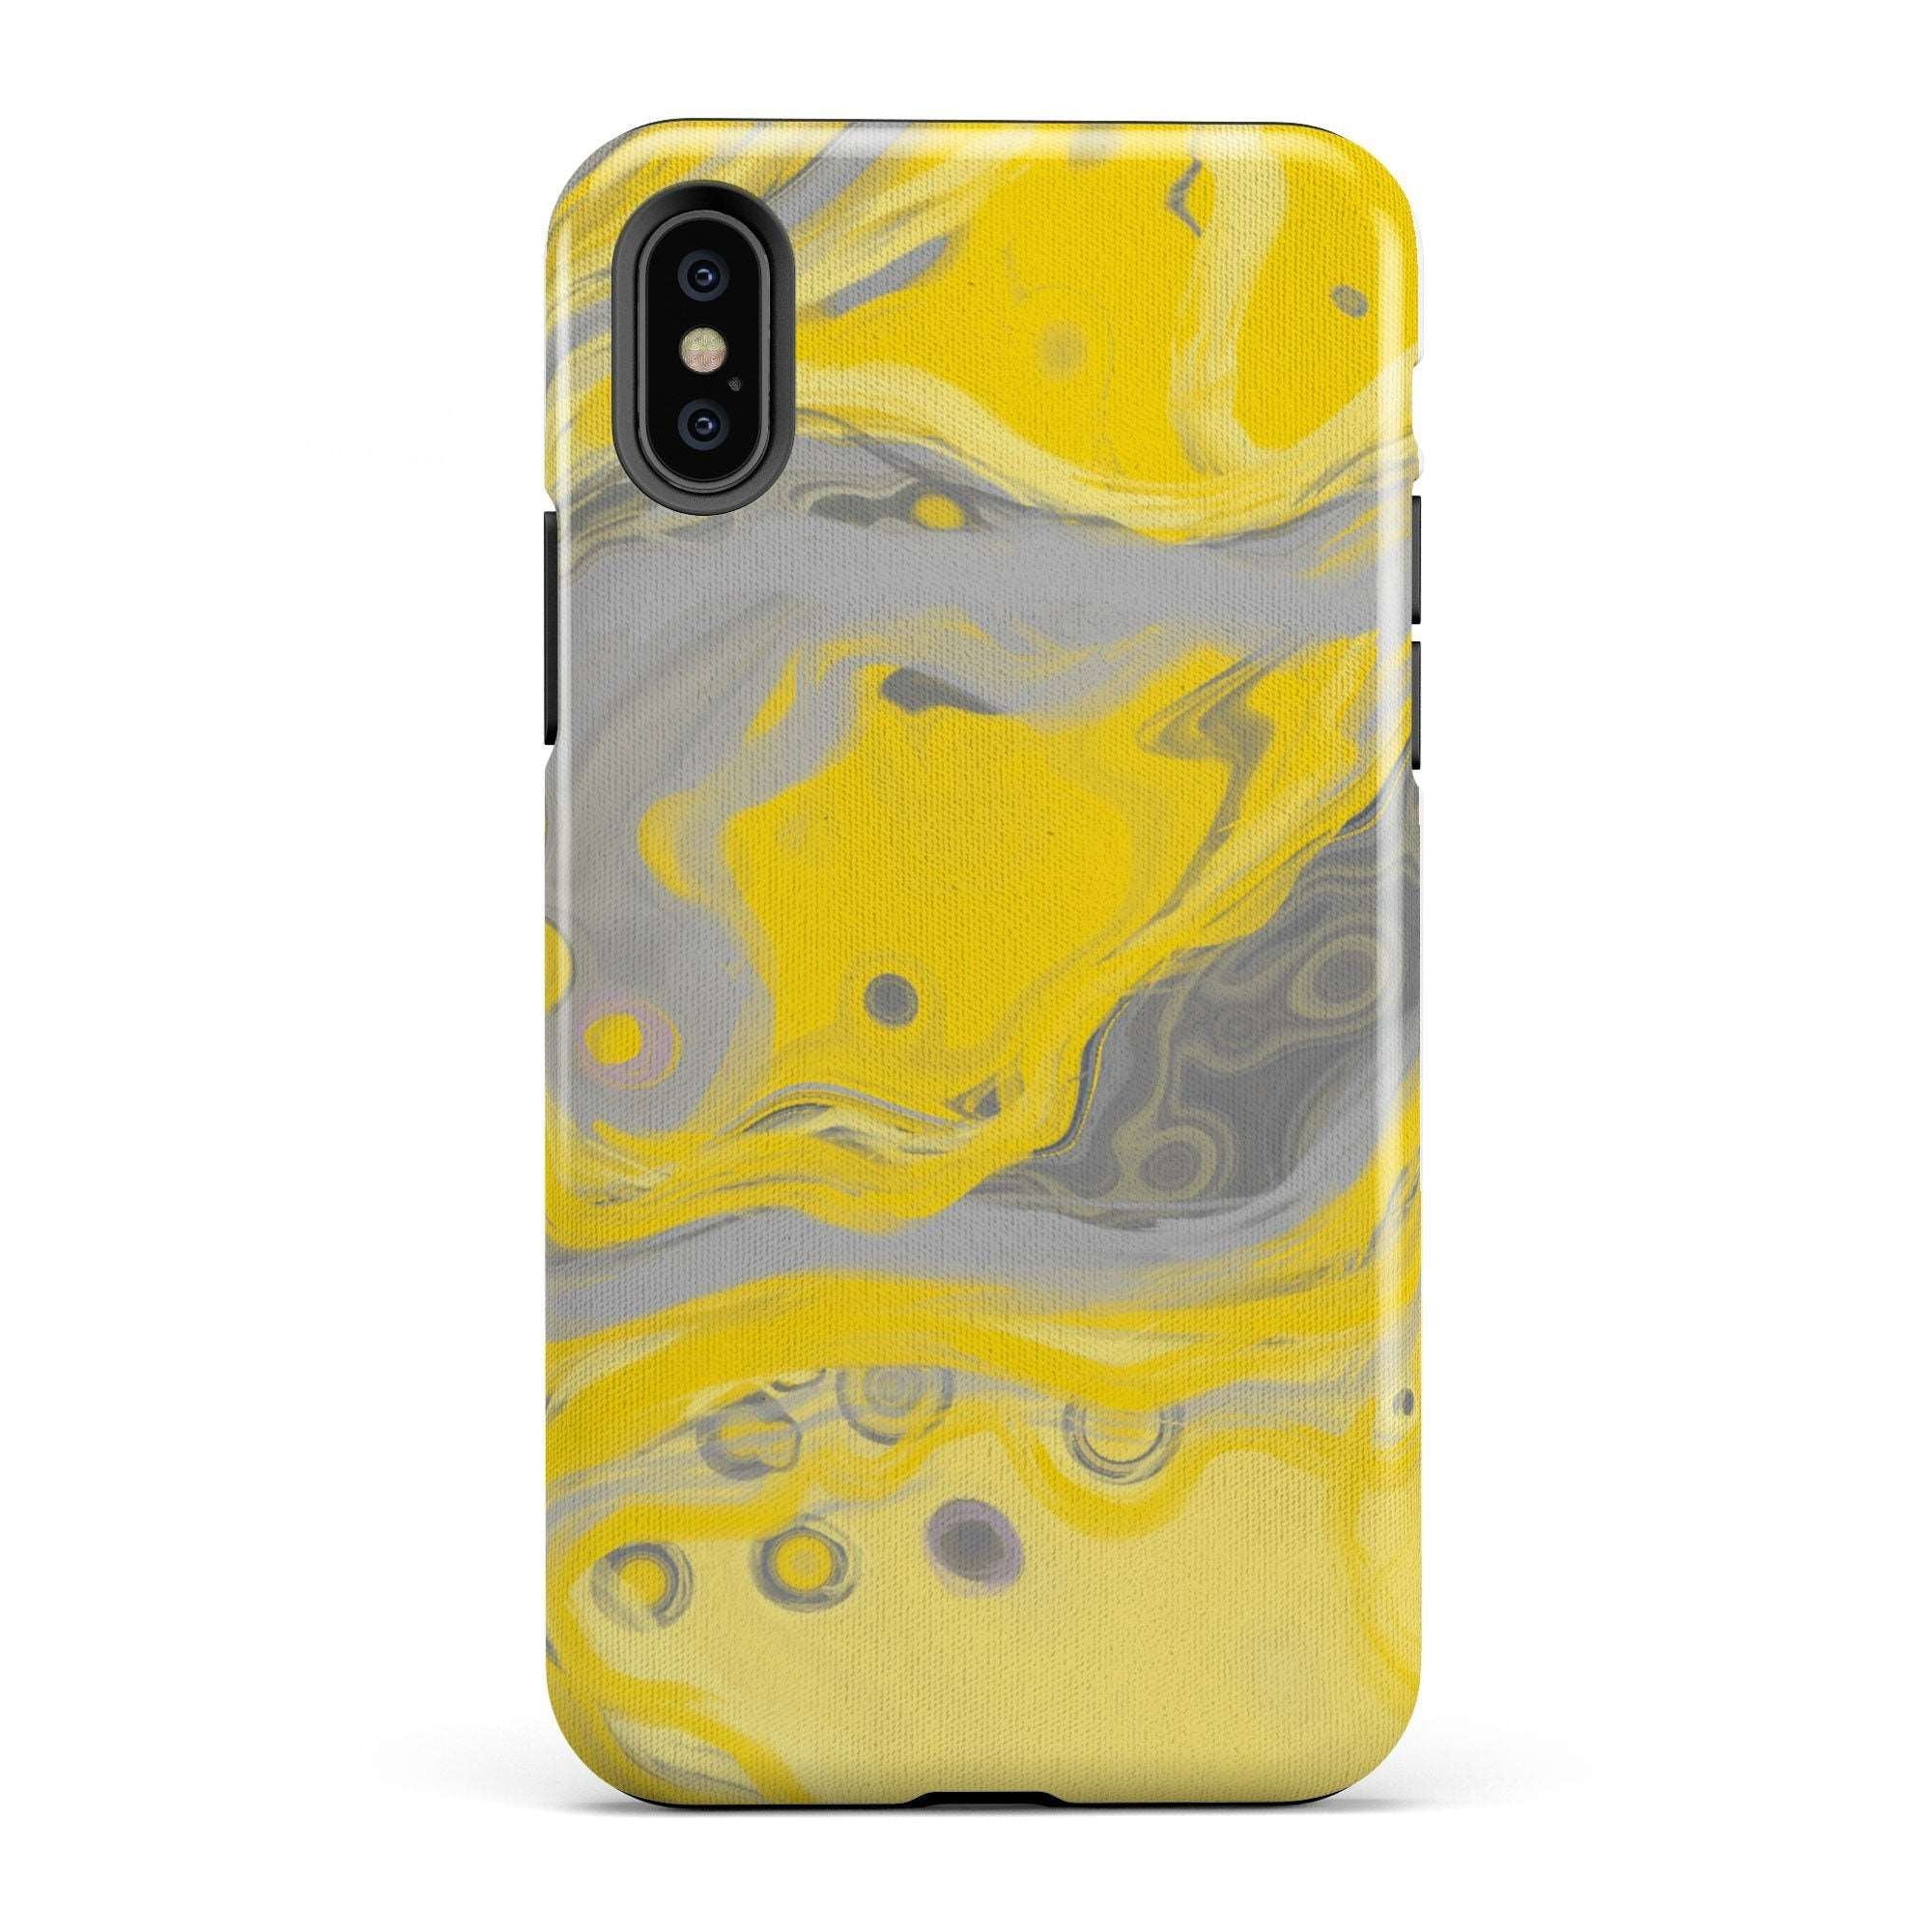 'Zest' Yellow & Grey iPhone Case